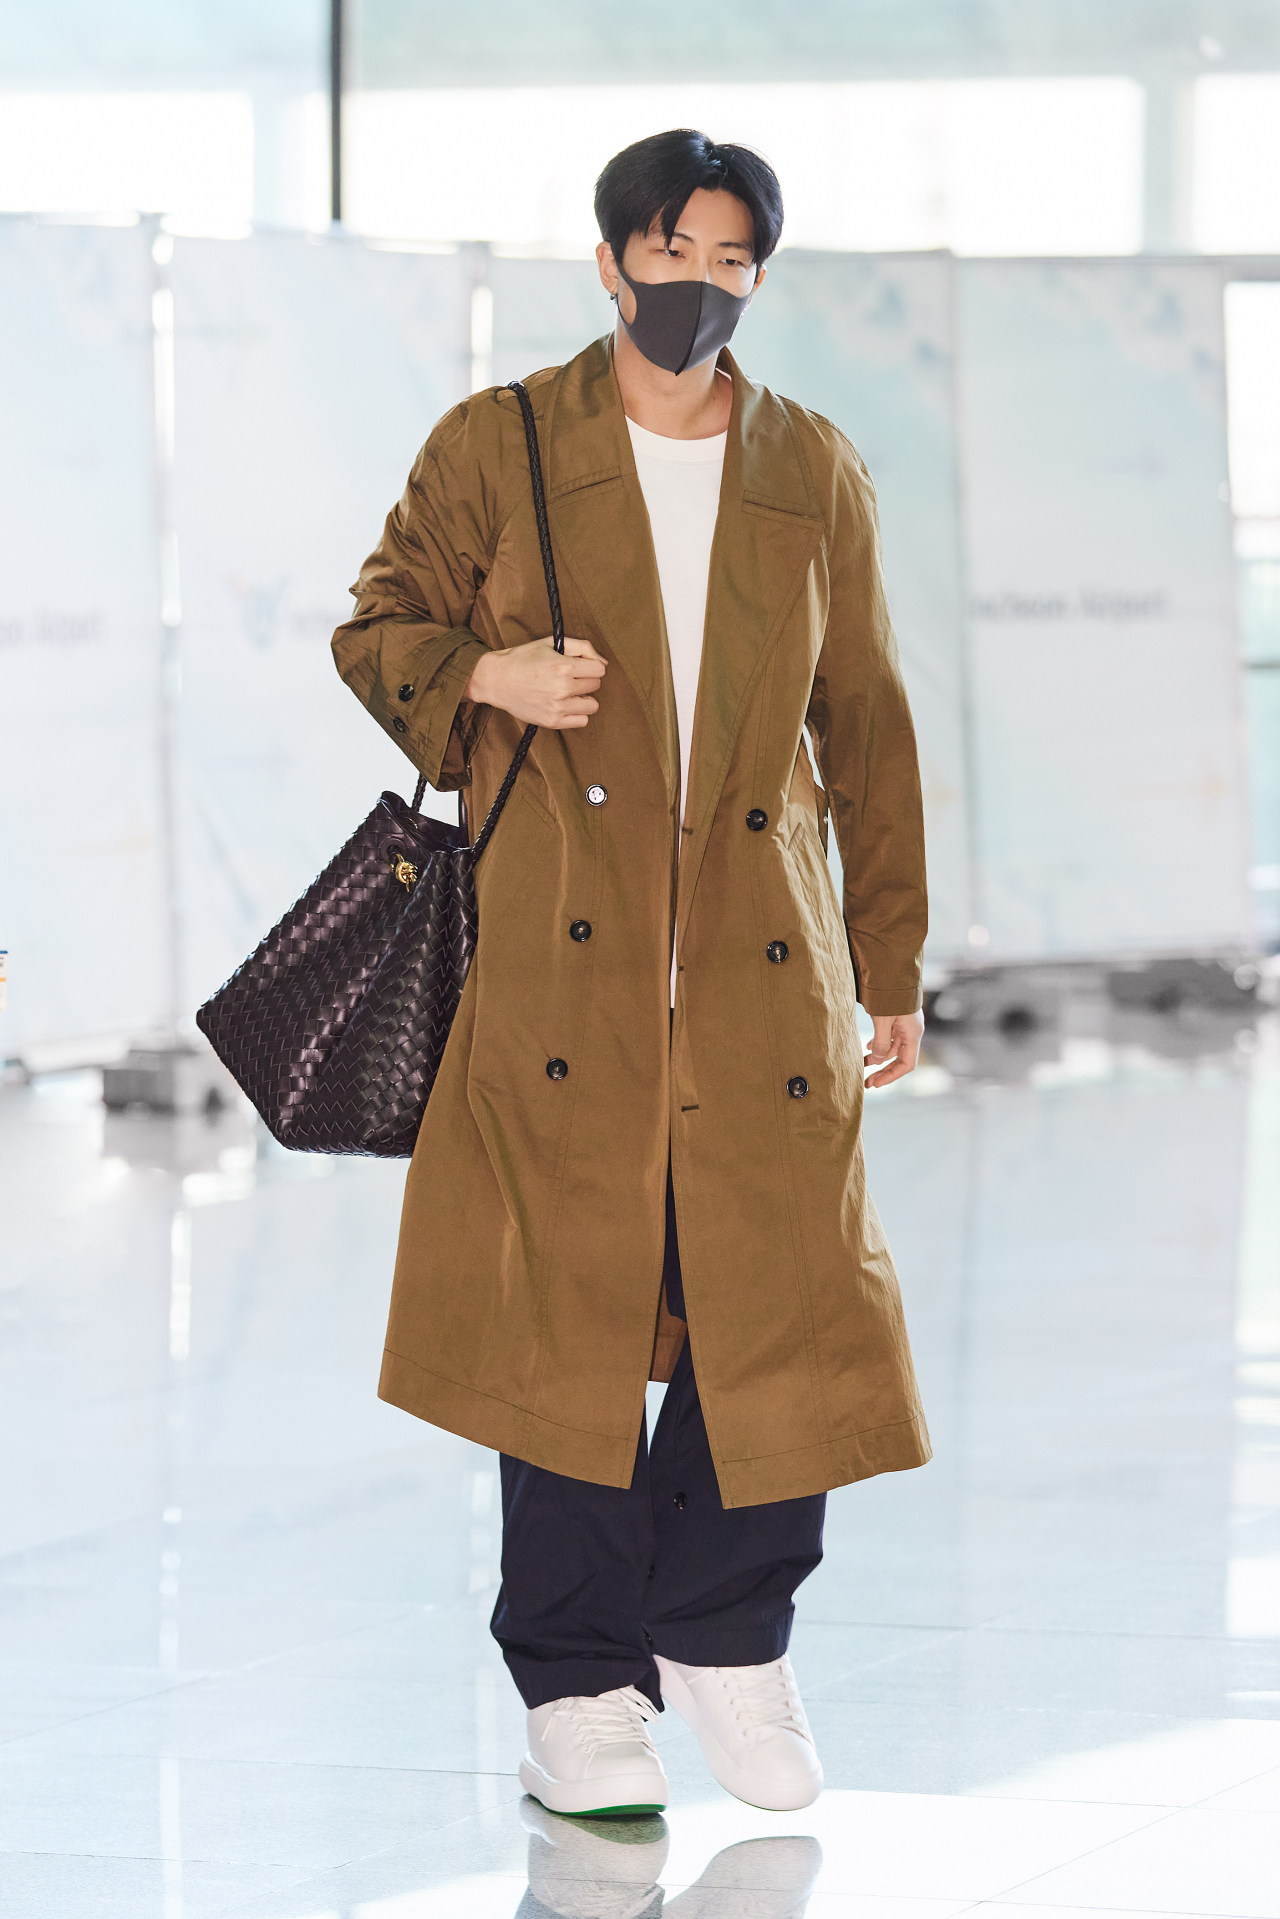 RM of BTS is seen carrying Bottega Veneta’s iconic large-sized brown leather Andiamo handbag. (Bottega Veneta)